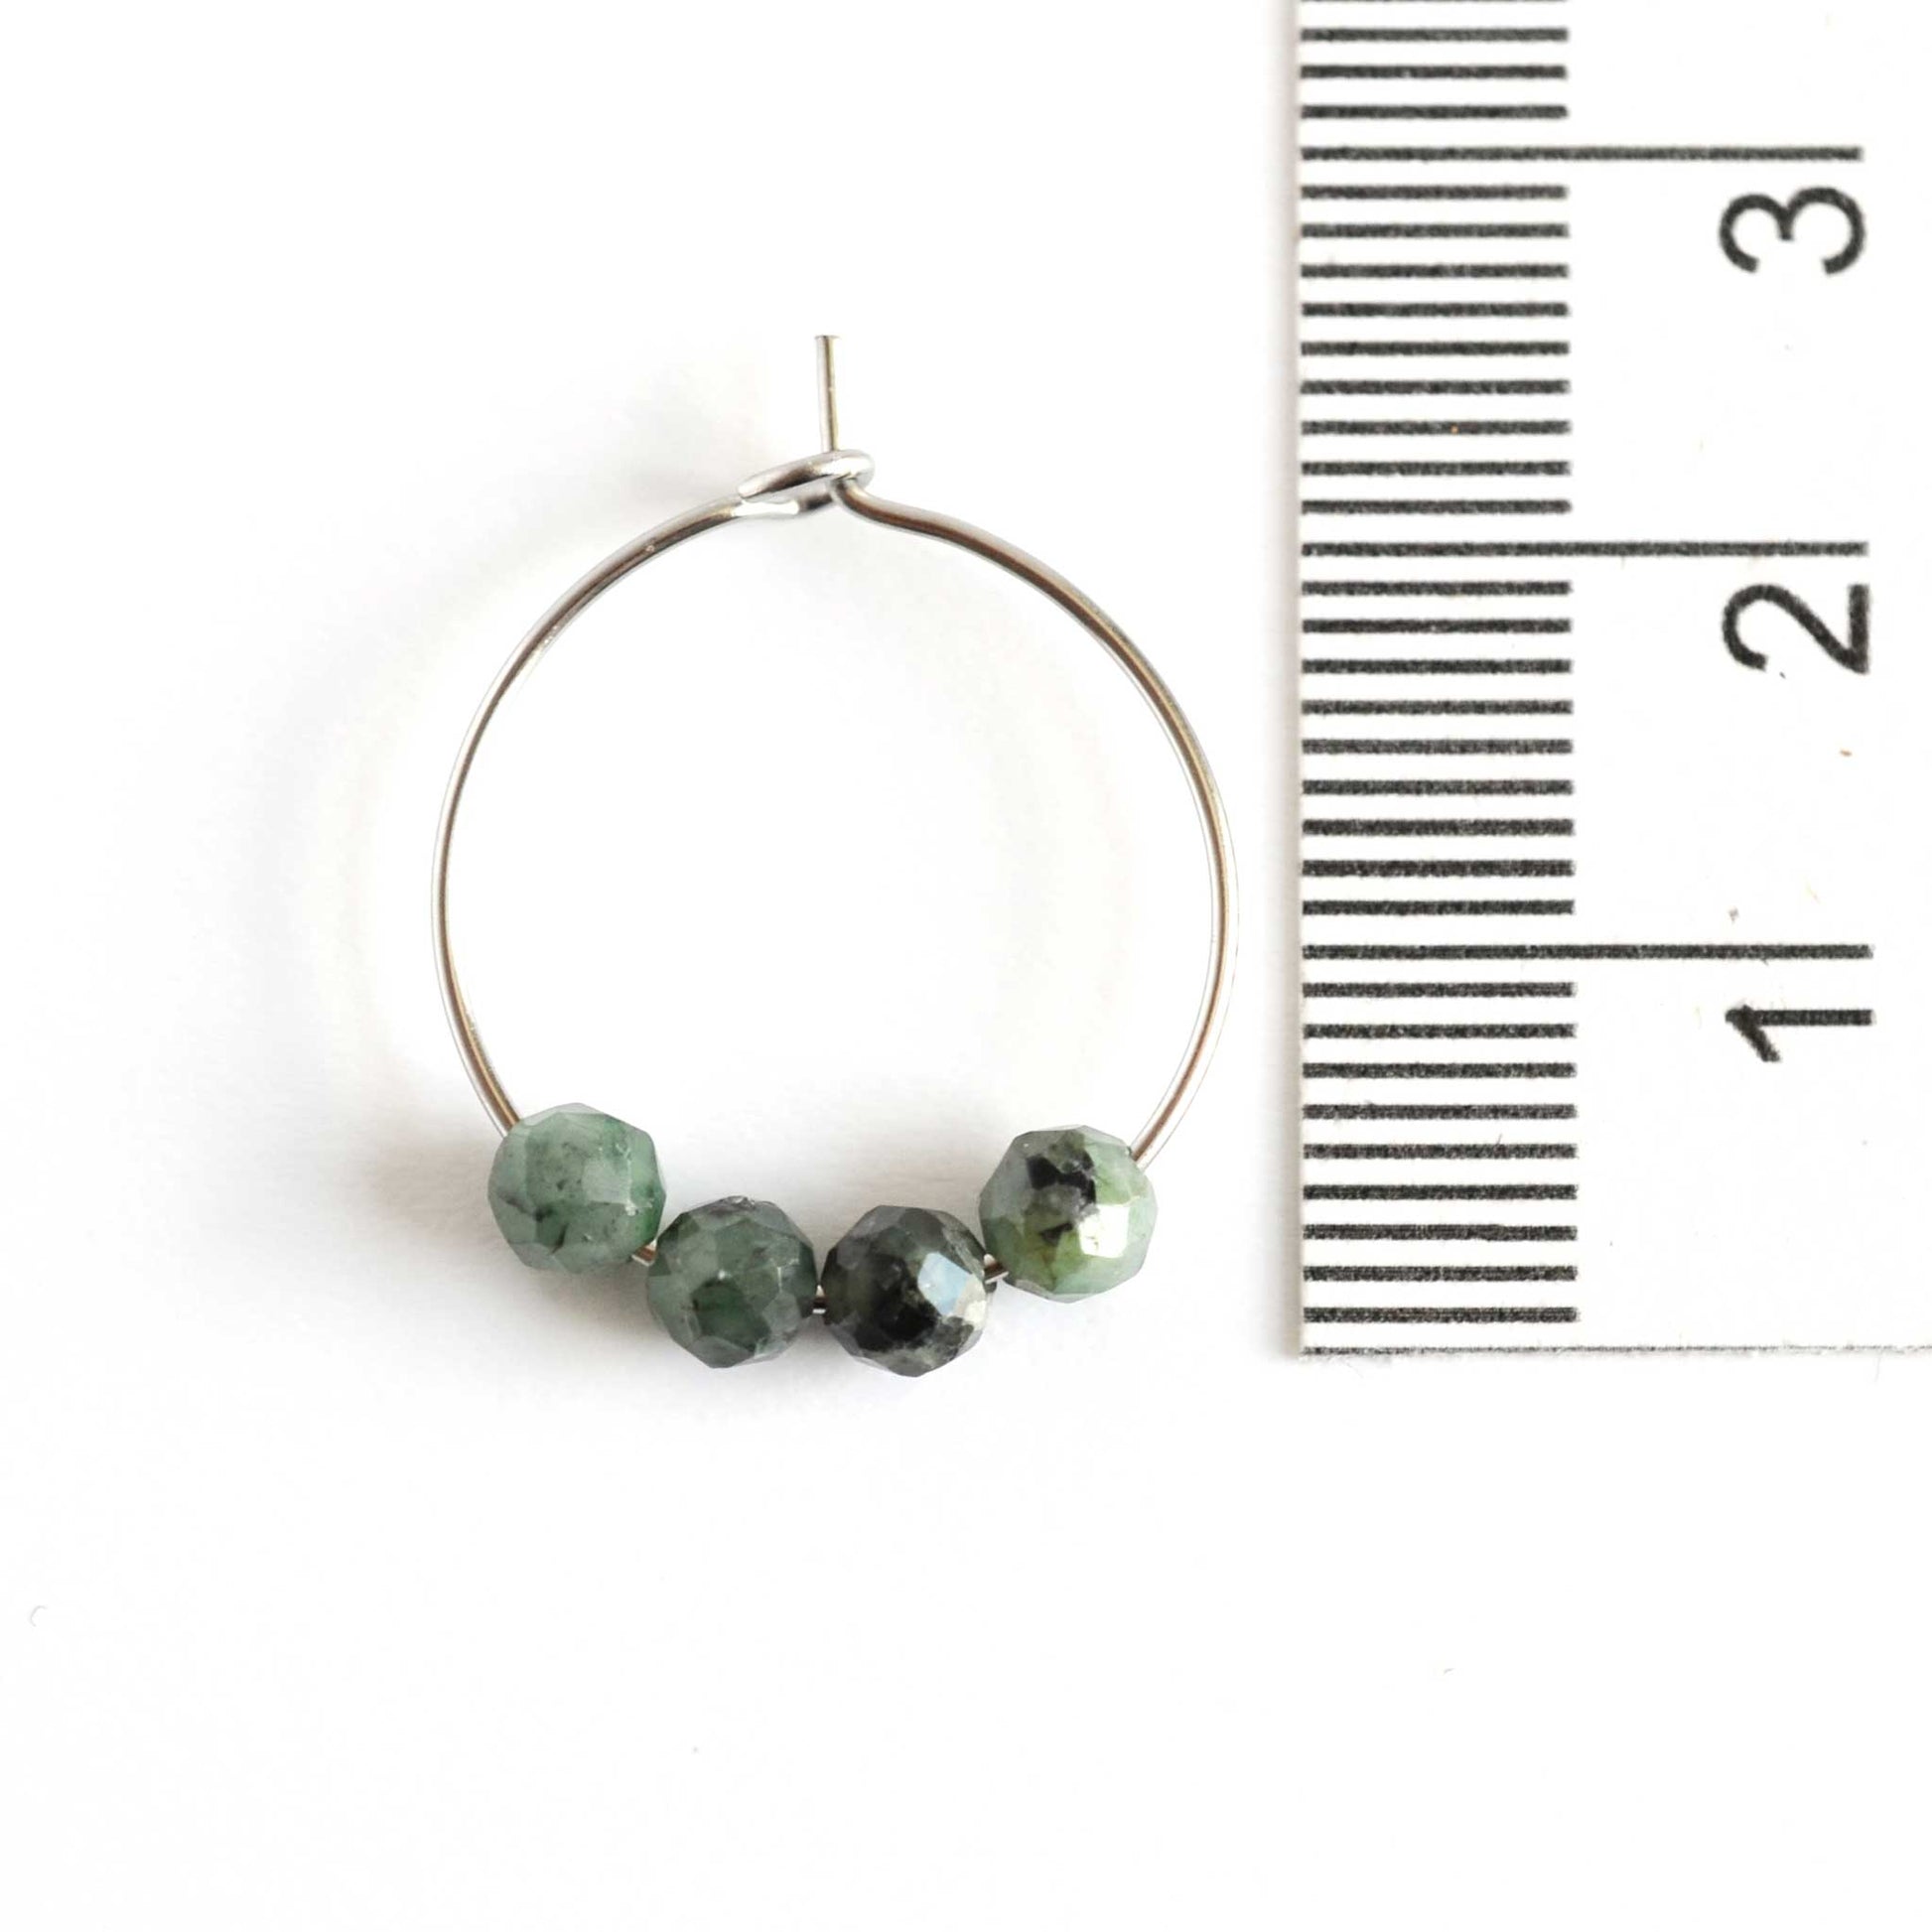 2cm diameter Emerald hoop earring next to ruler